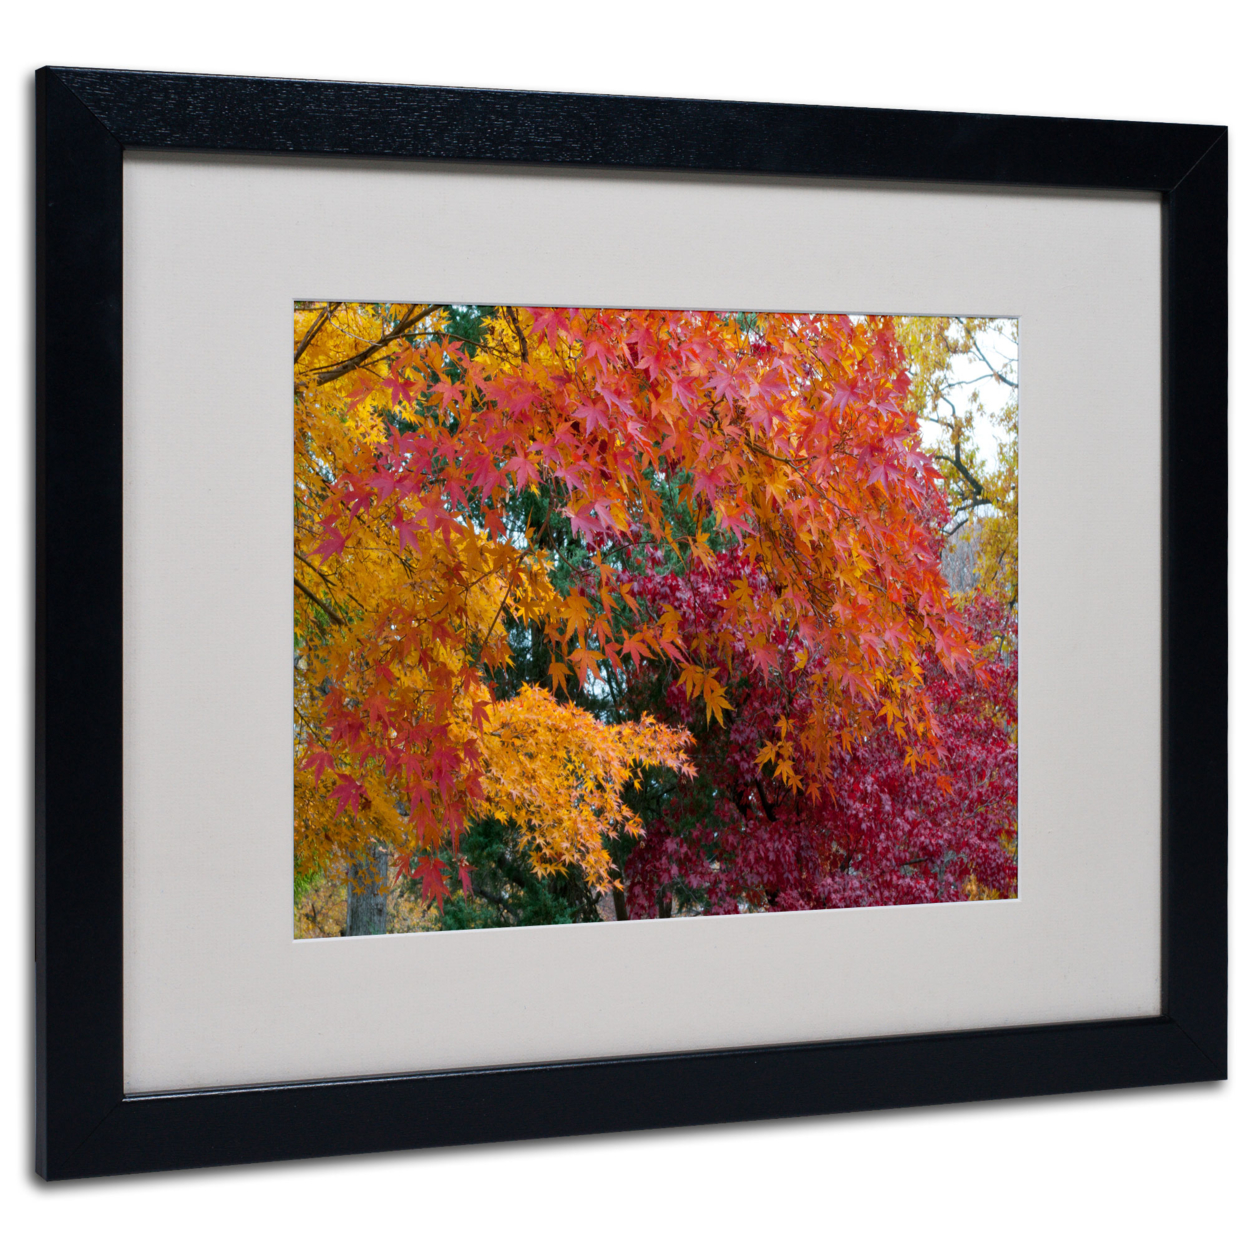 Kurt Shaffer 'Autumn Explosion' Black Wooden Framed Art 18 X 22 Inches